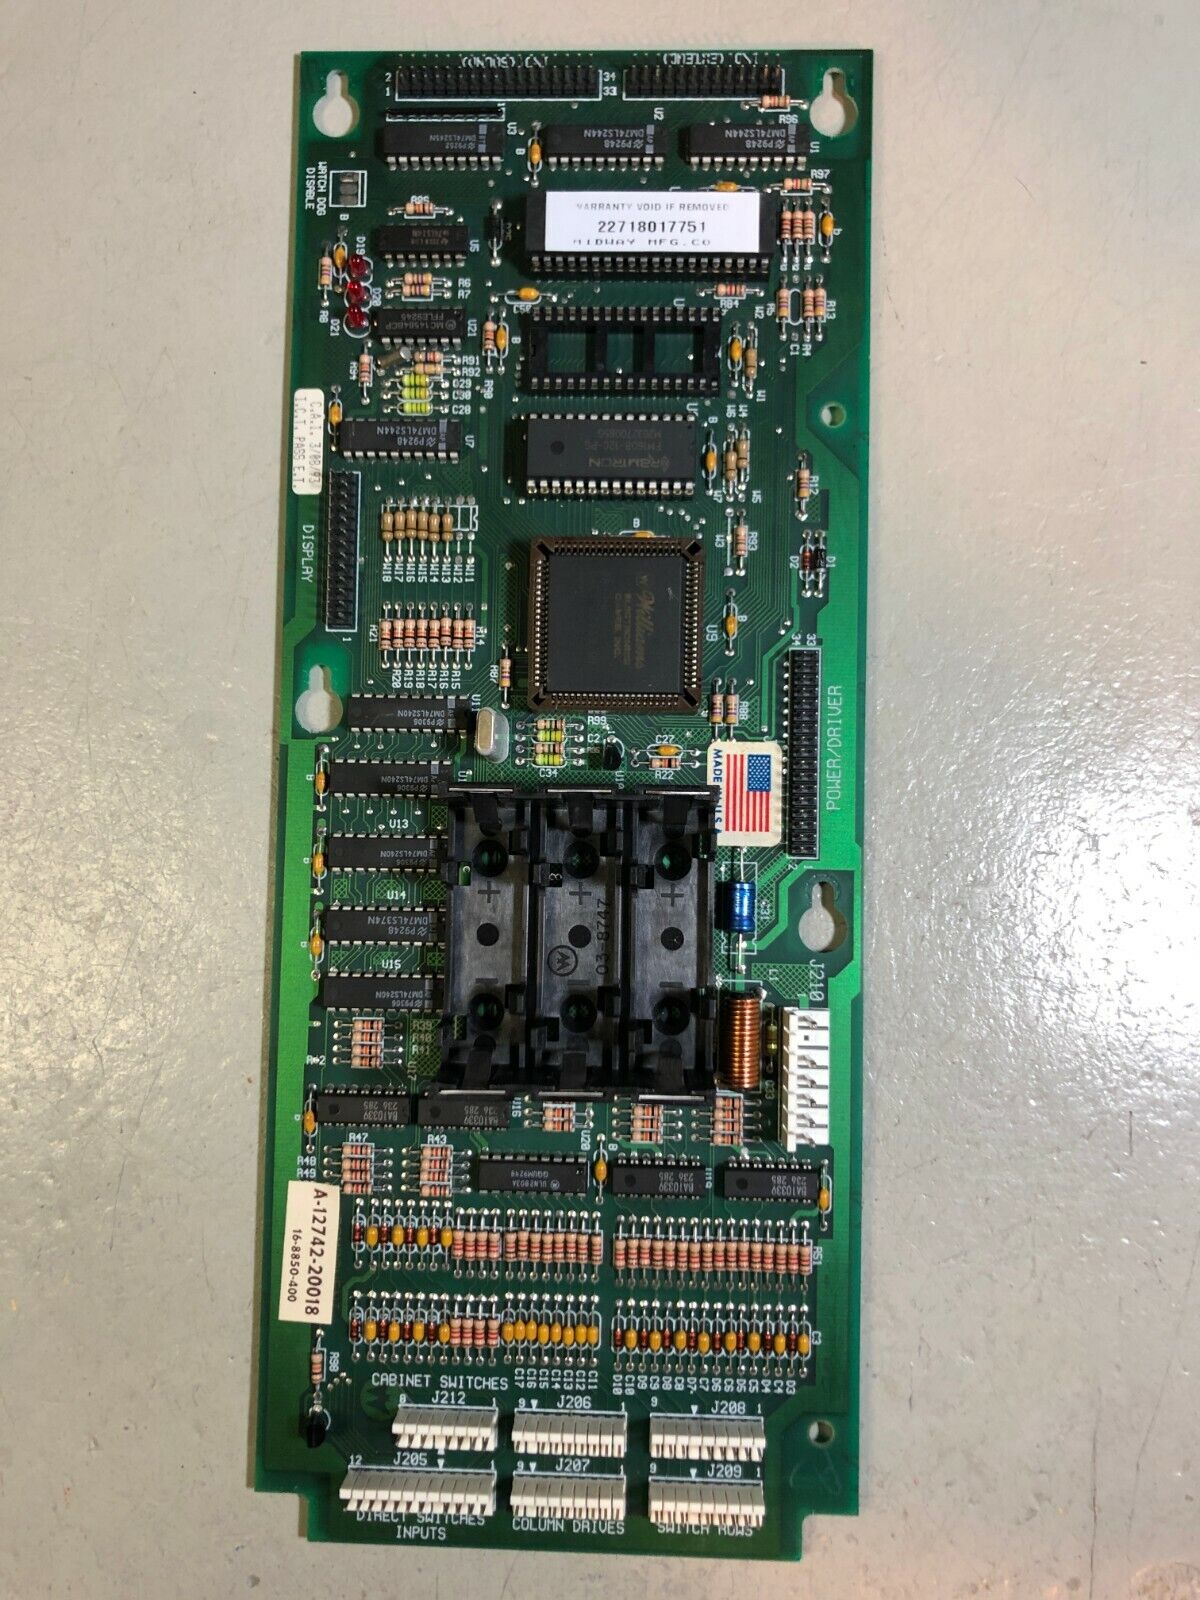  Williams Bally WPC CPU MPU PCB Board with NV-RAM A-12742 NO ACID DAMAGE Tested 